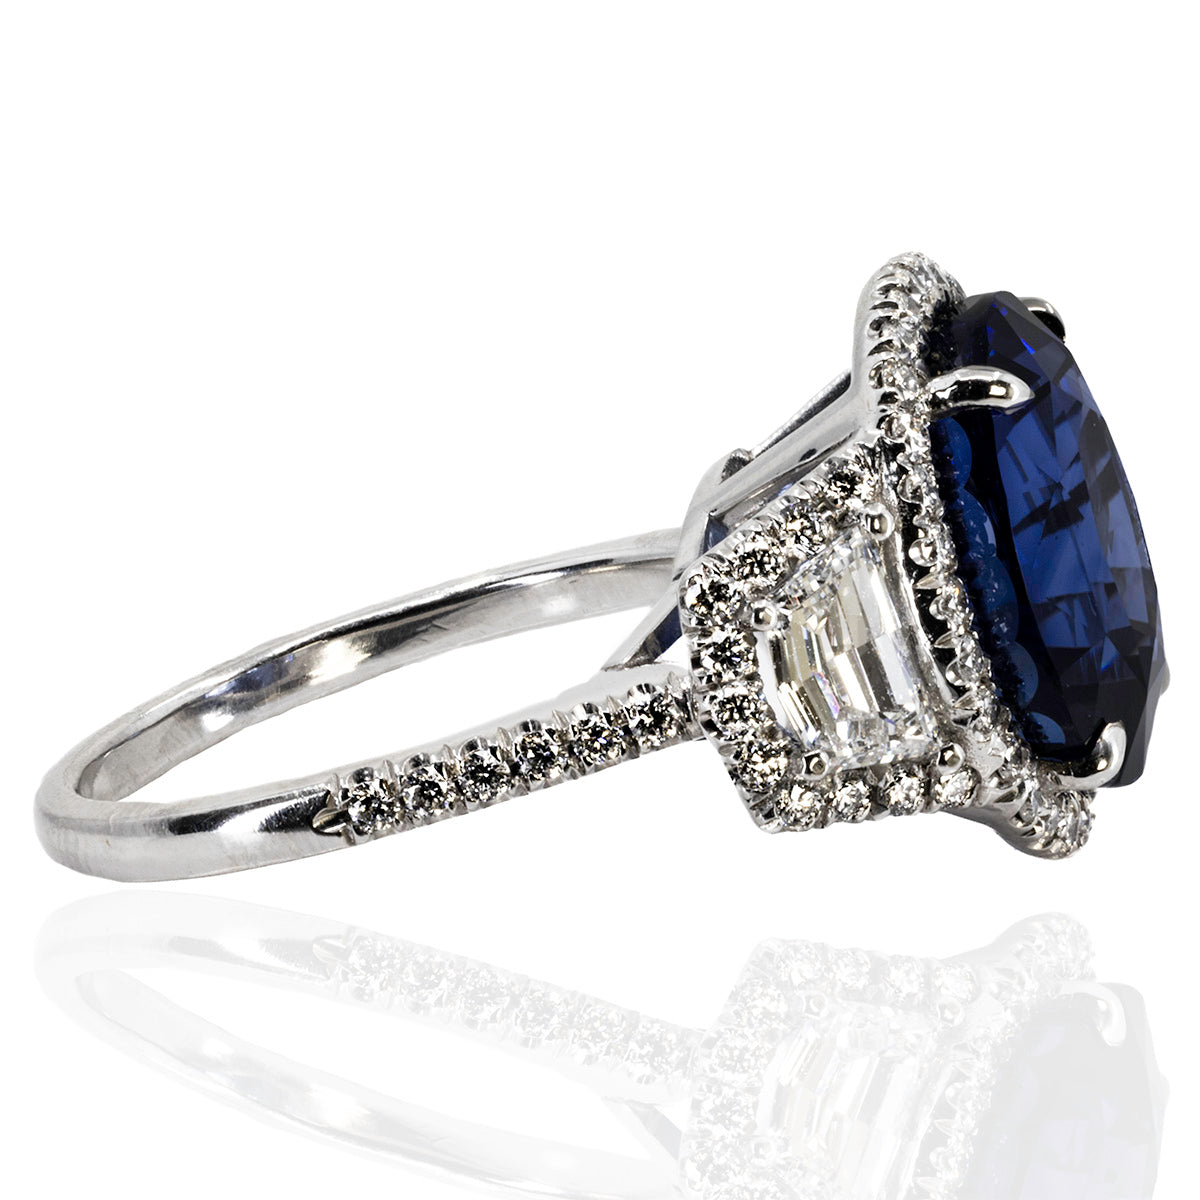 9.56 Carat Royal Blue Sapphire Ring